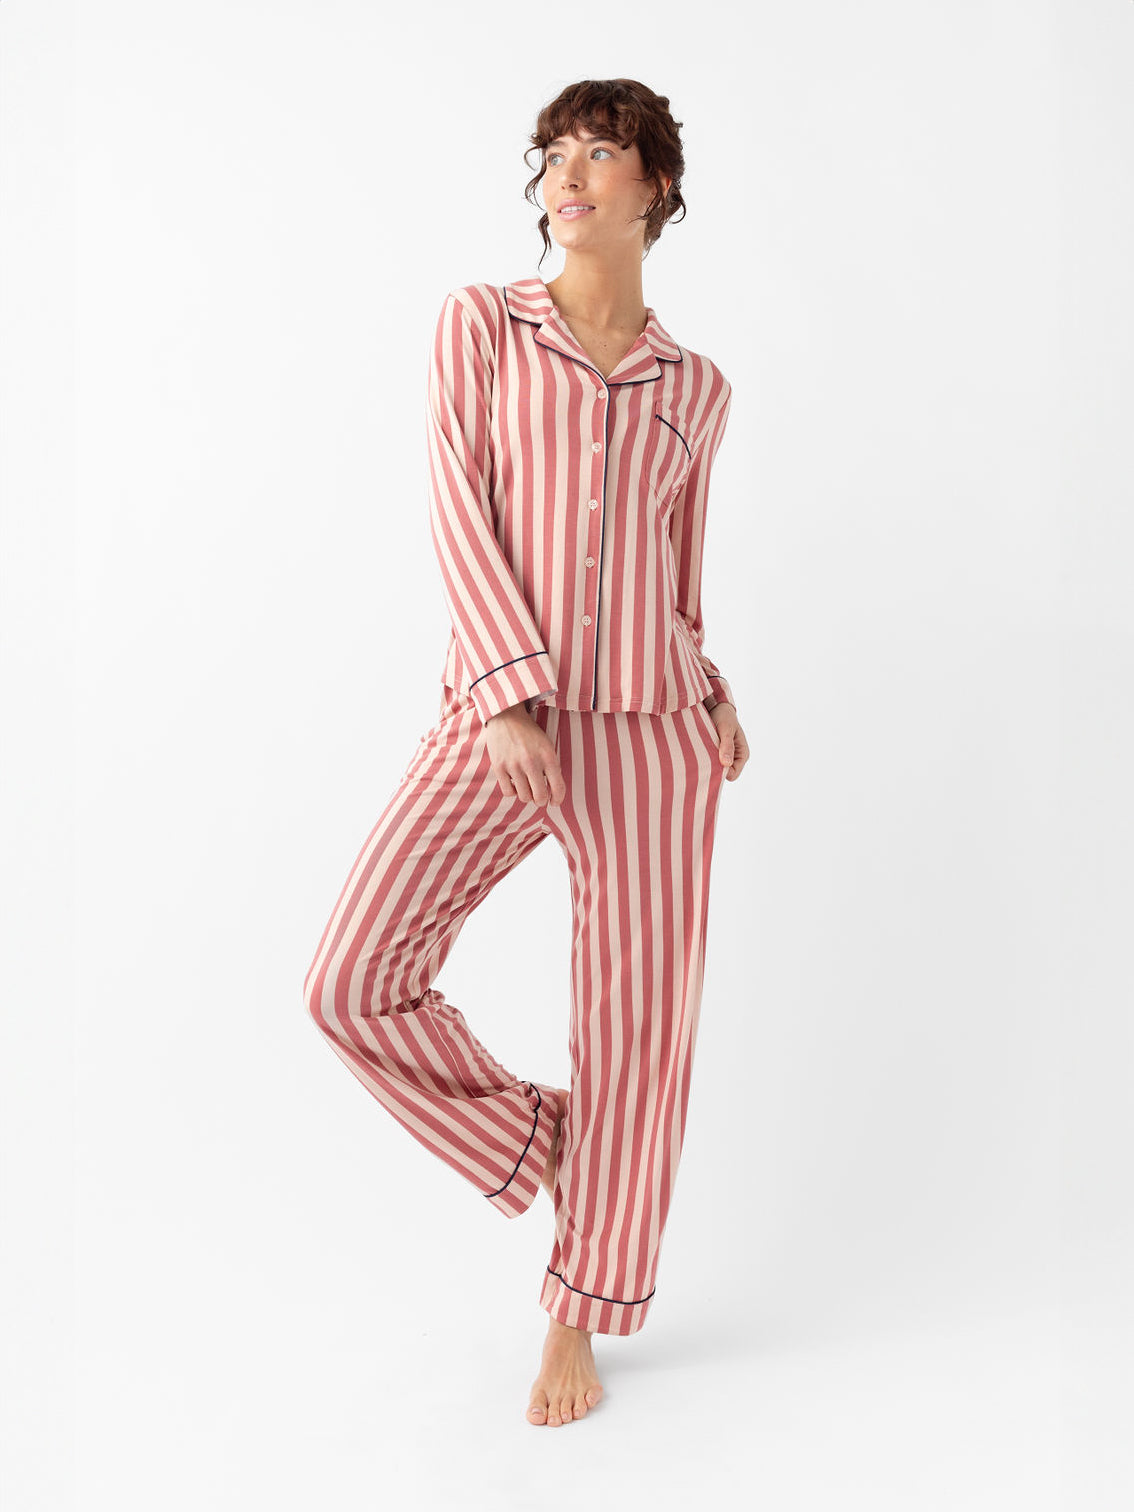 Woman wearing blush stripe pajama set with white background 